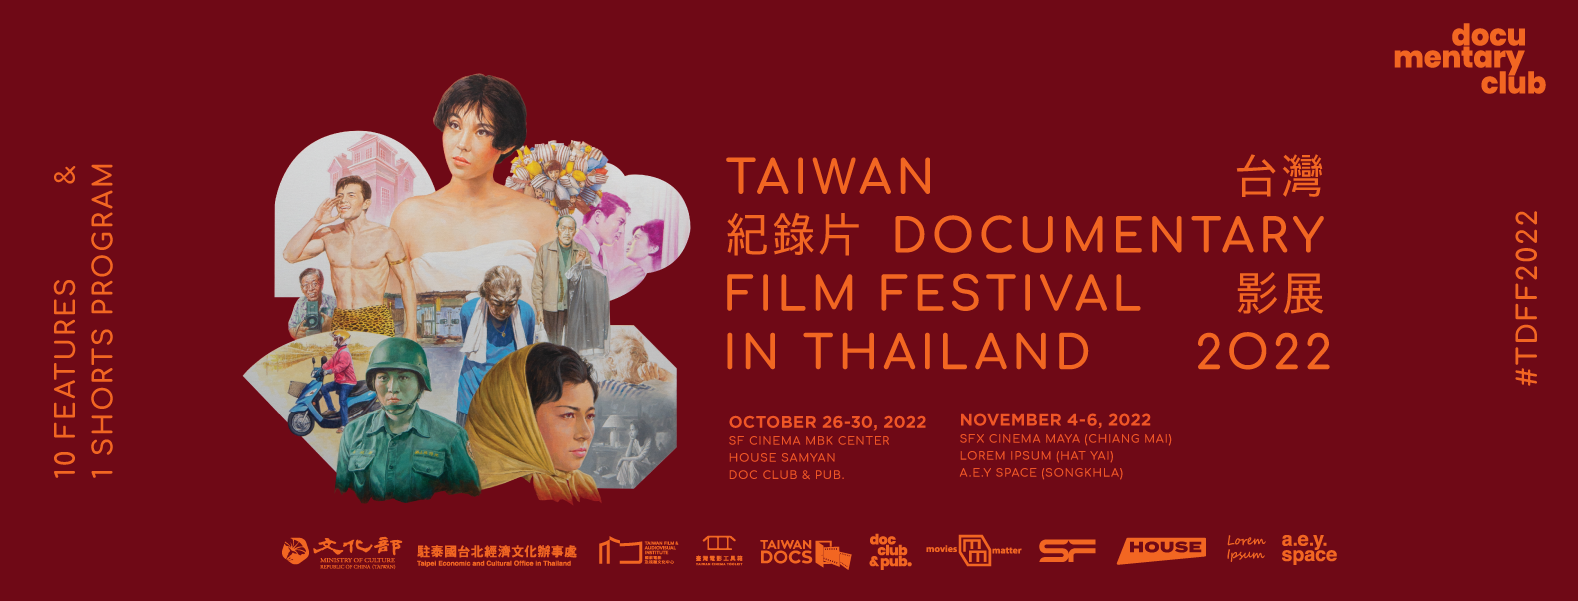 Taiwan Documentary Film Festival | Things to do in Bangkok